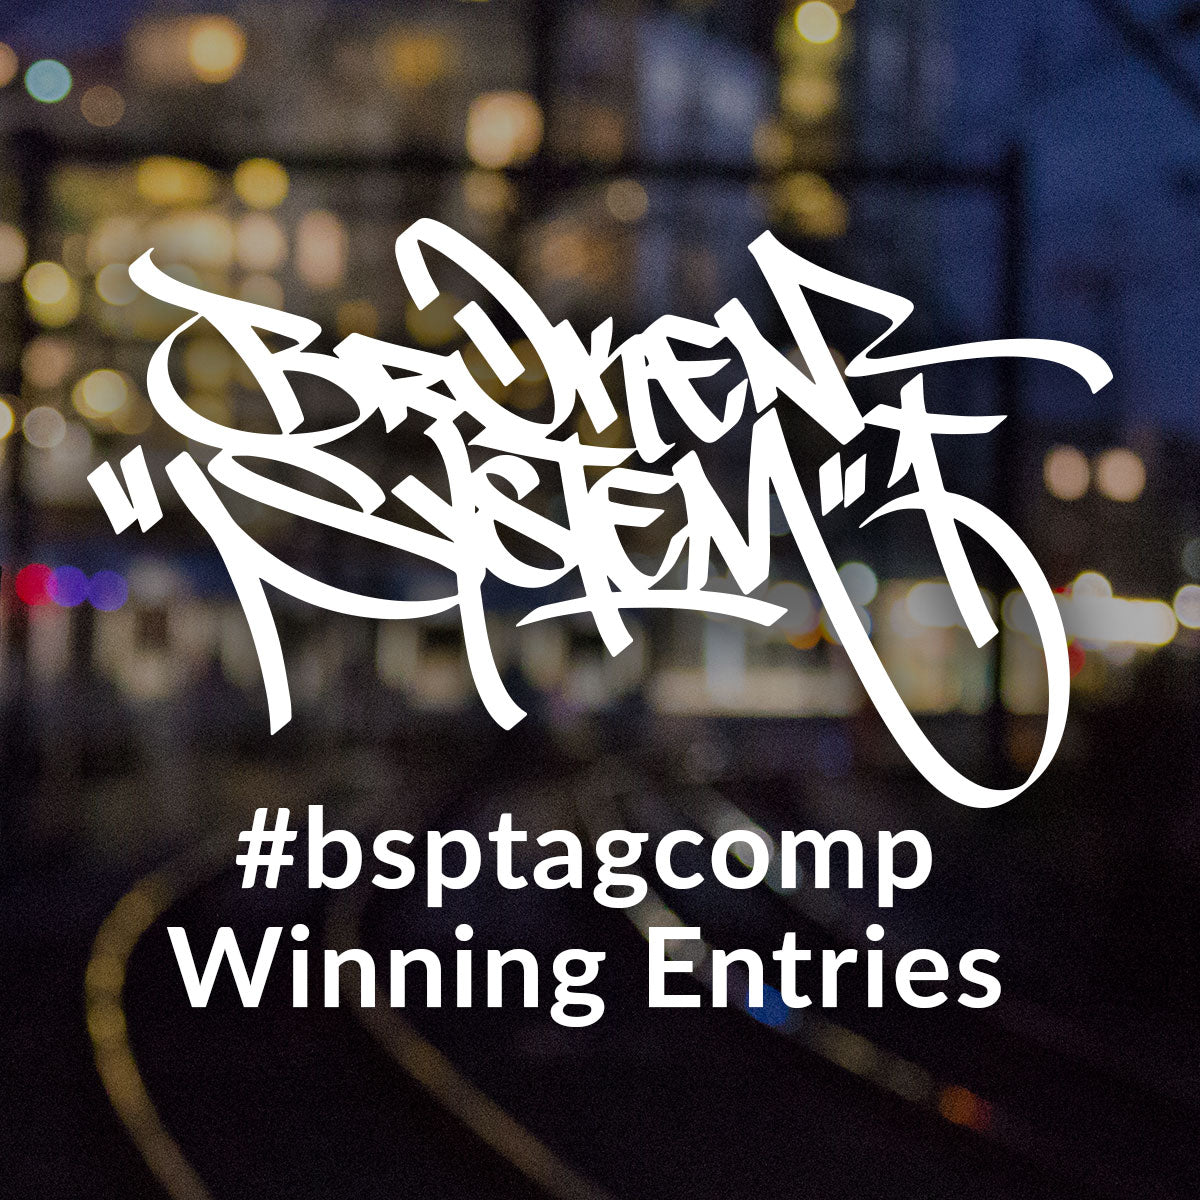 BSP Tag Comp - Winning Entries